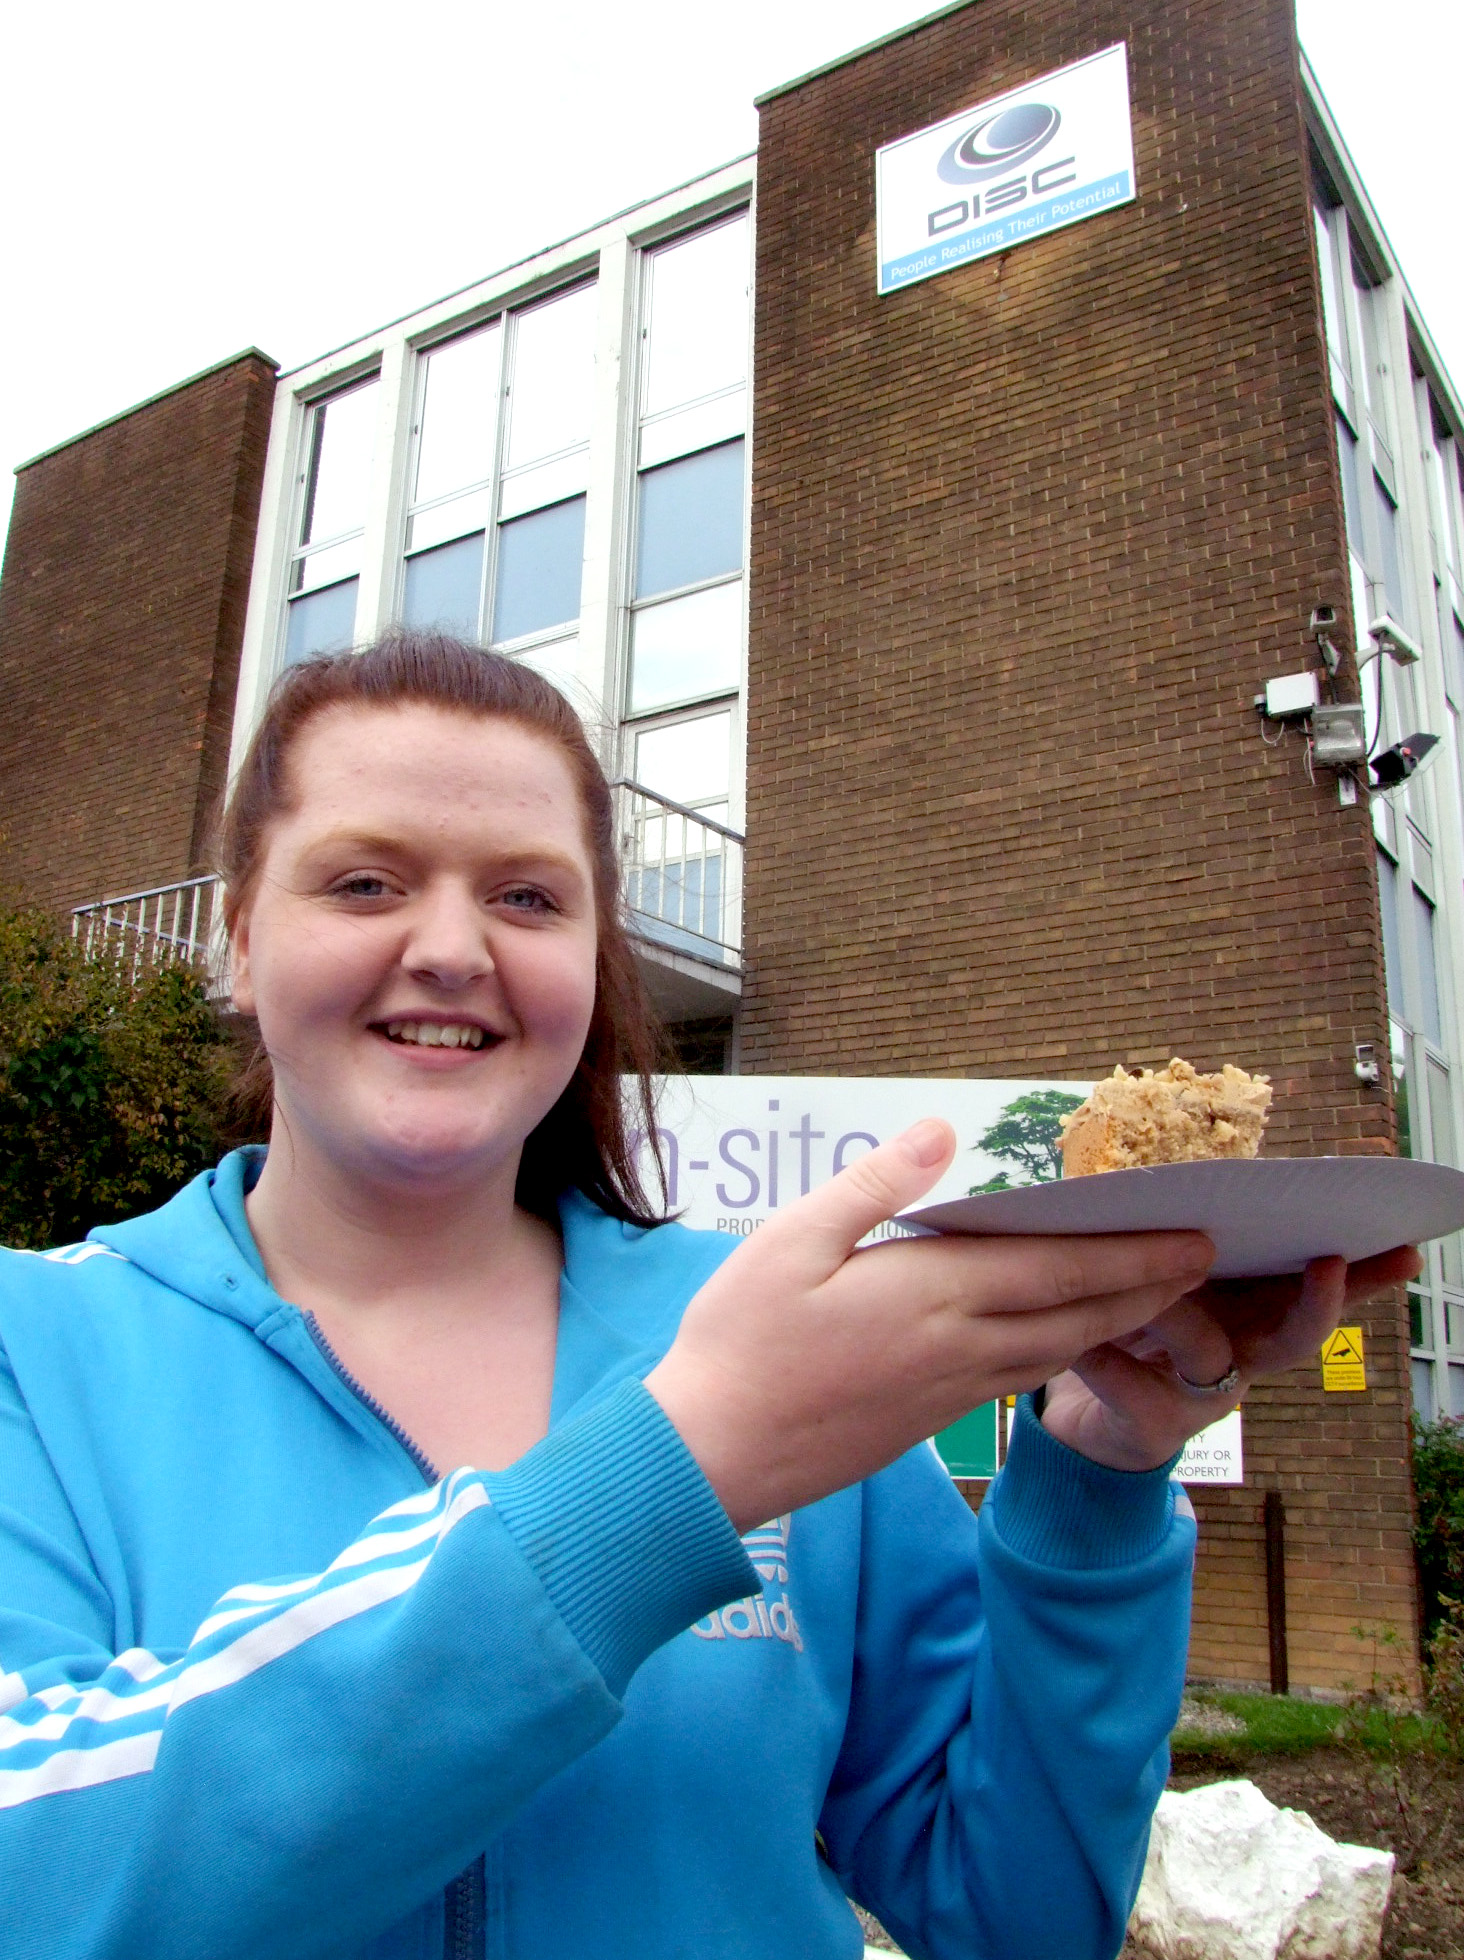 Students Earn Crust for Macmillan Charity